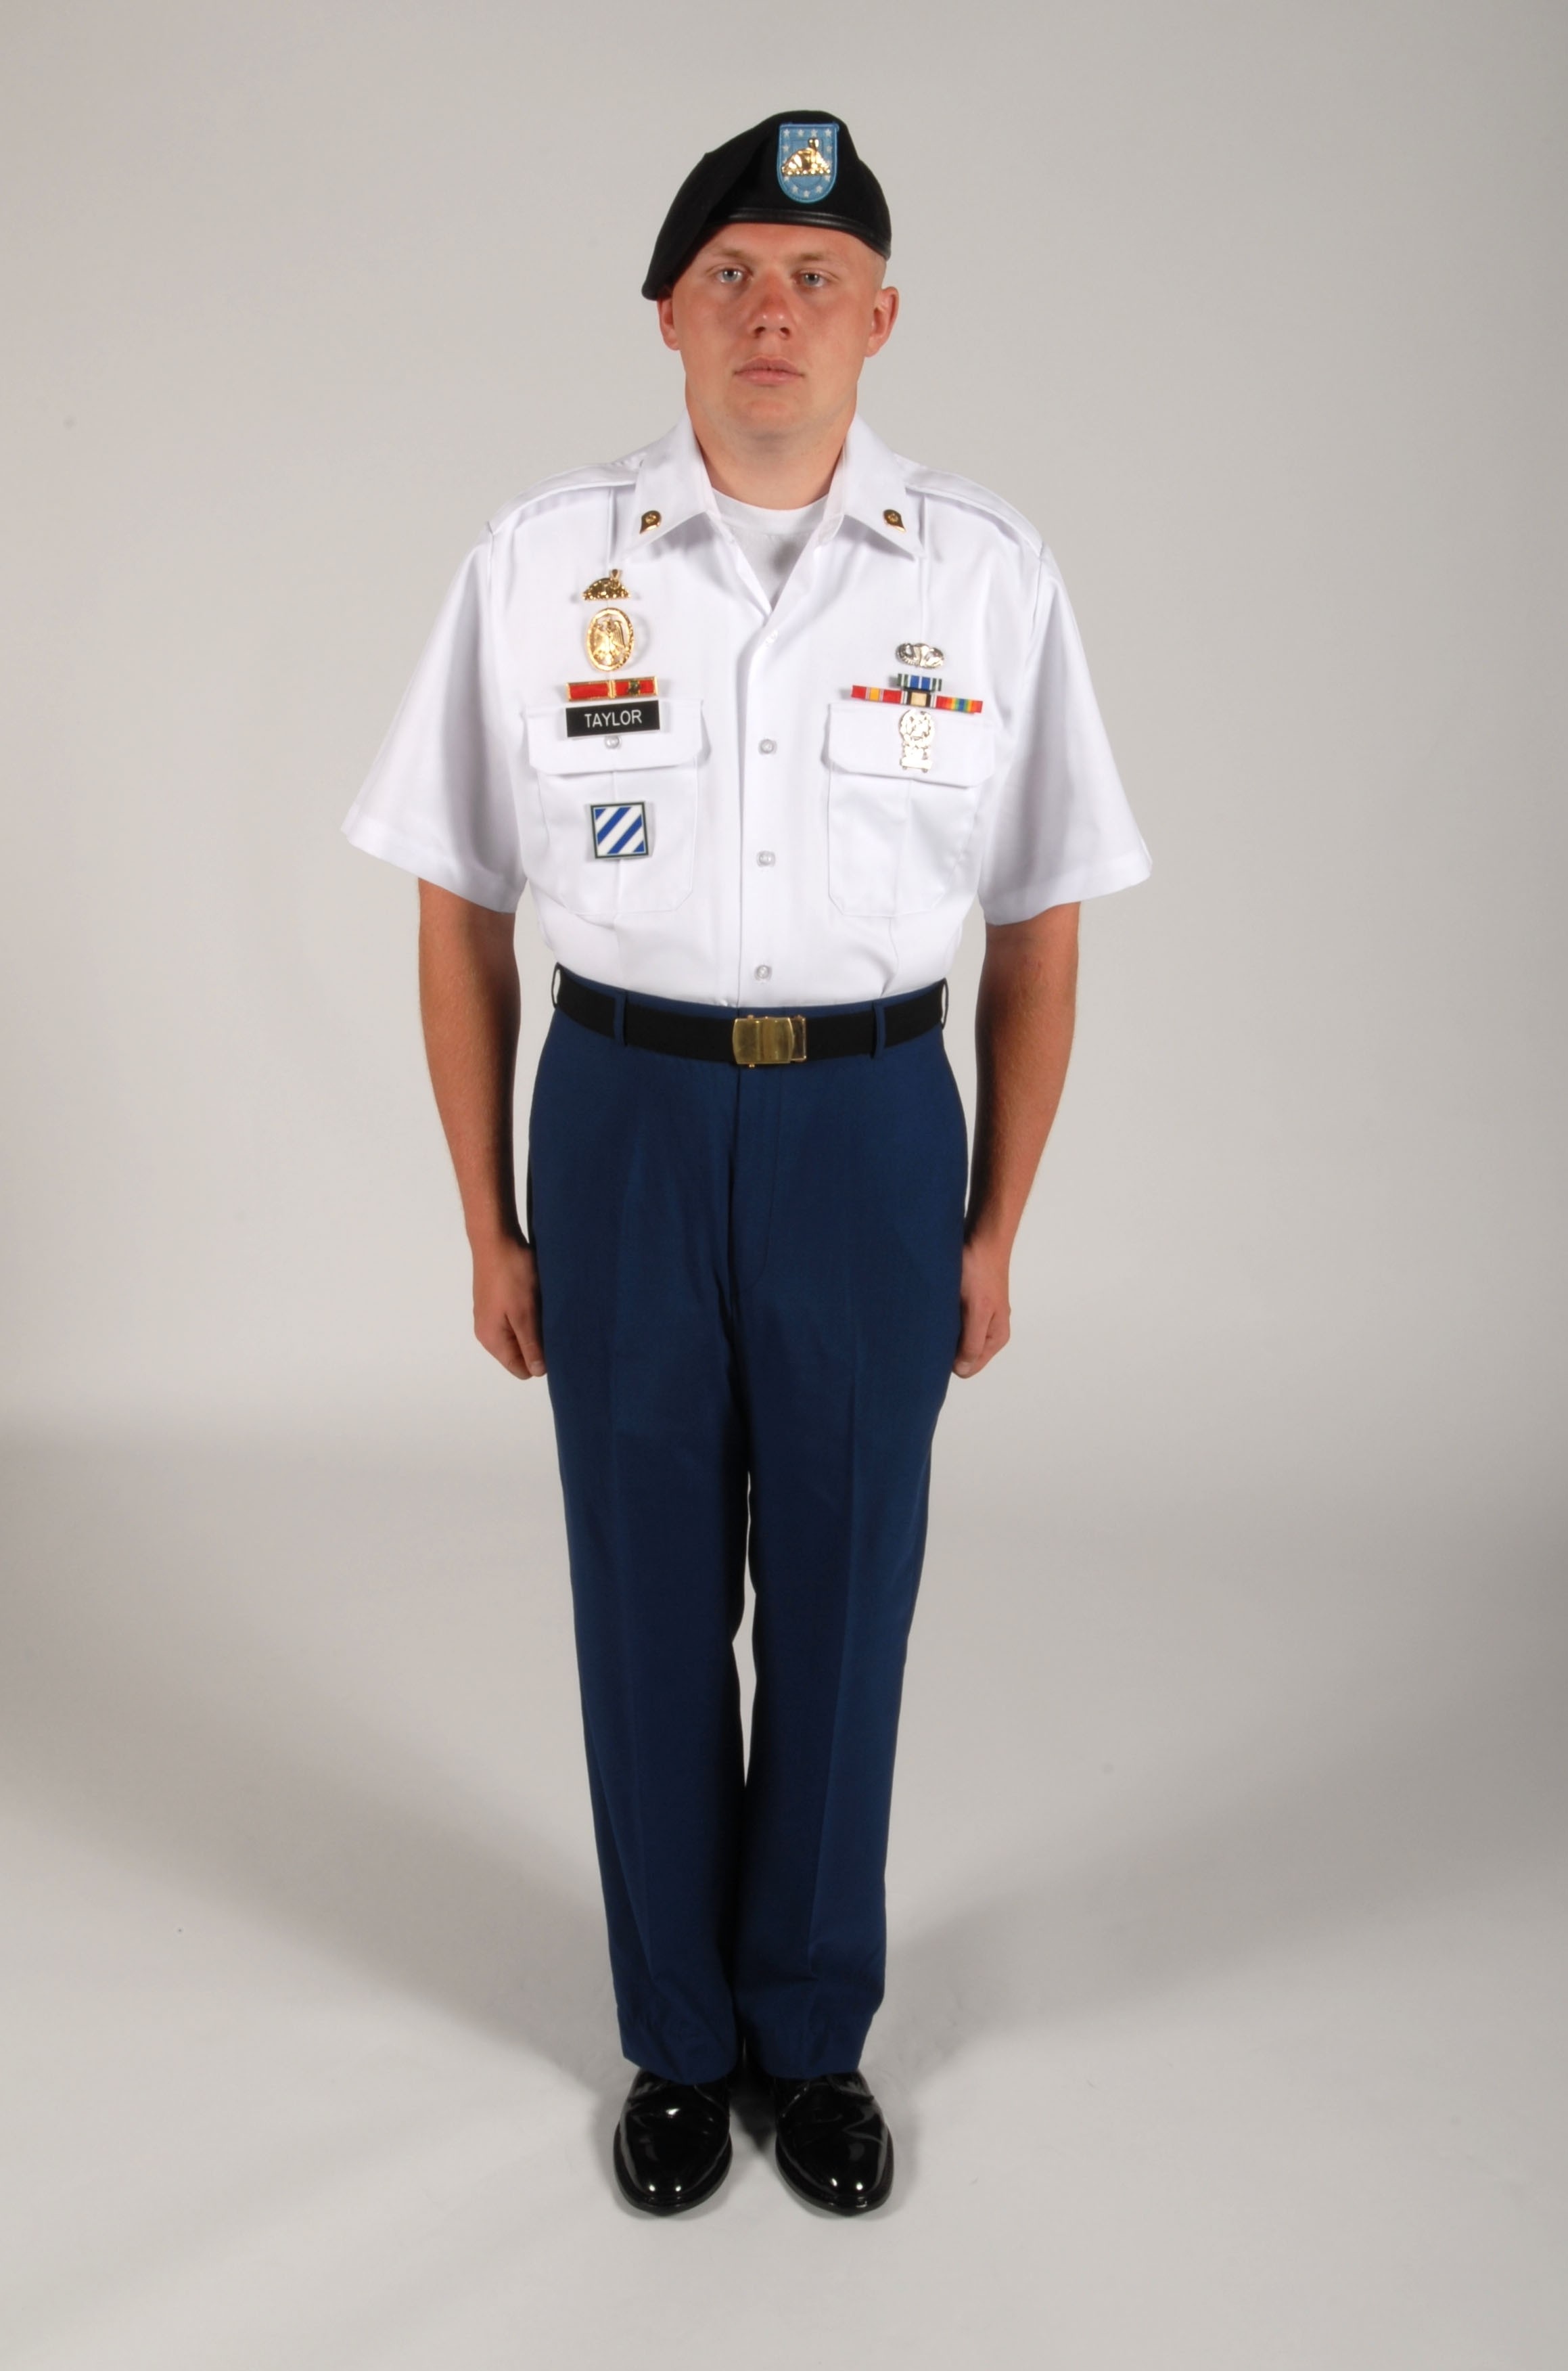 Army Blue Service Uniform 86